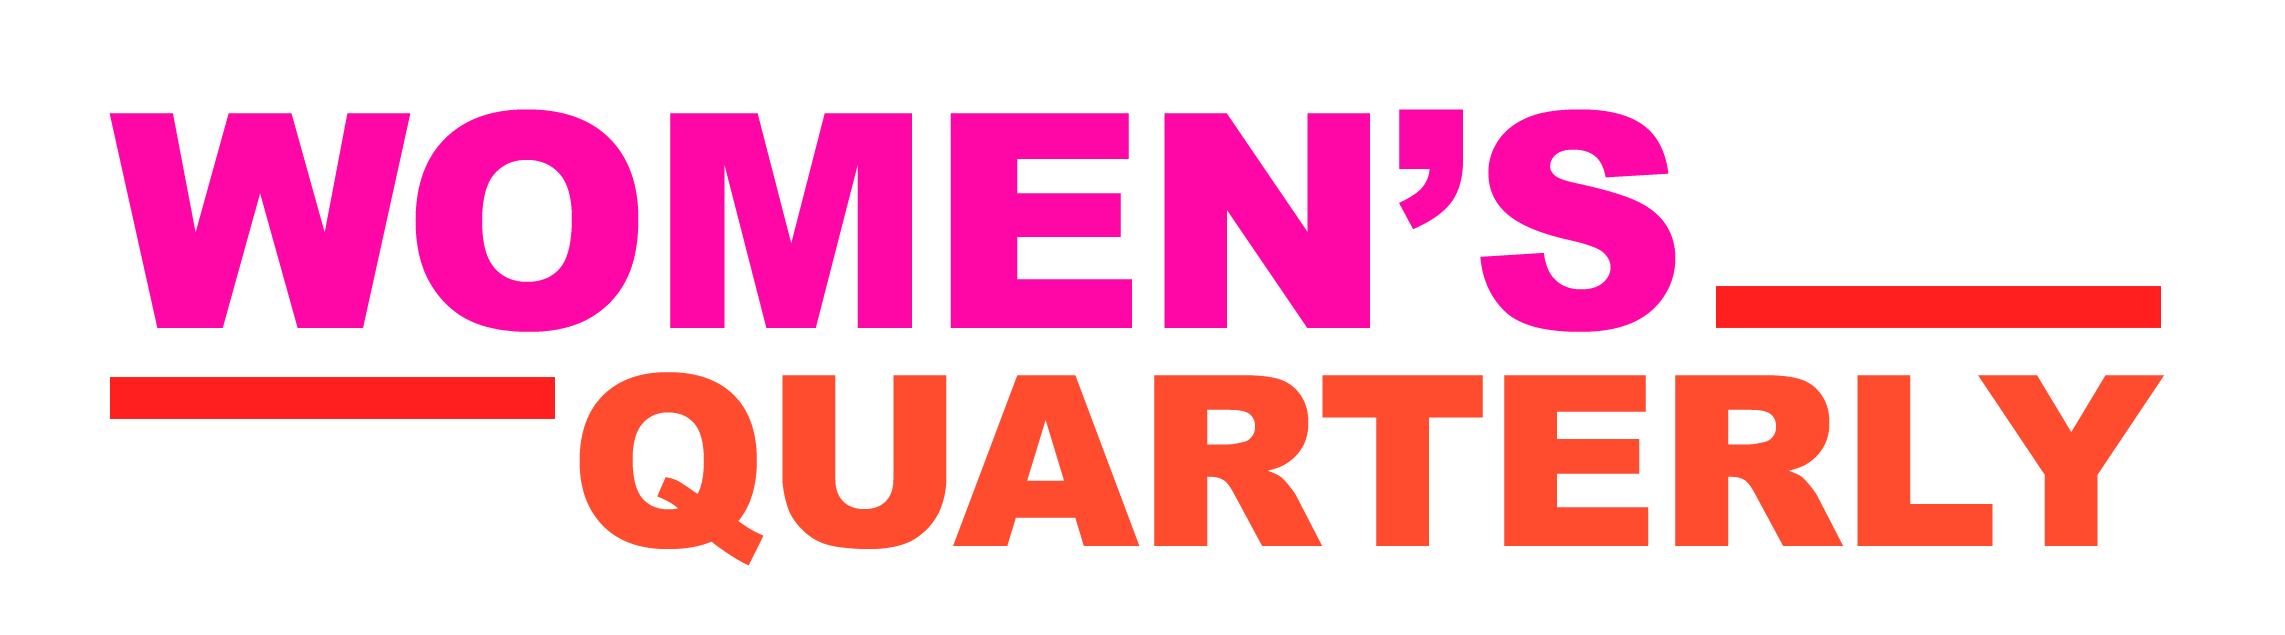 women’s quarterly